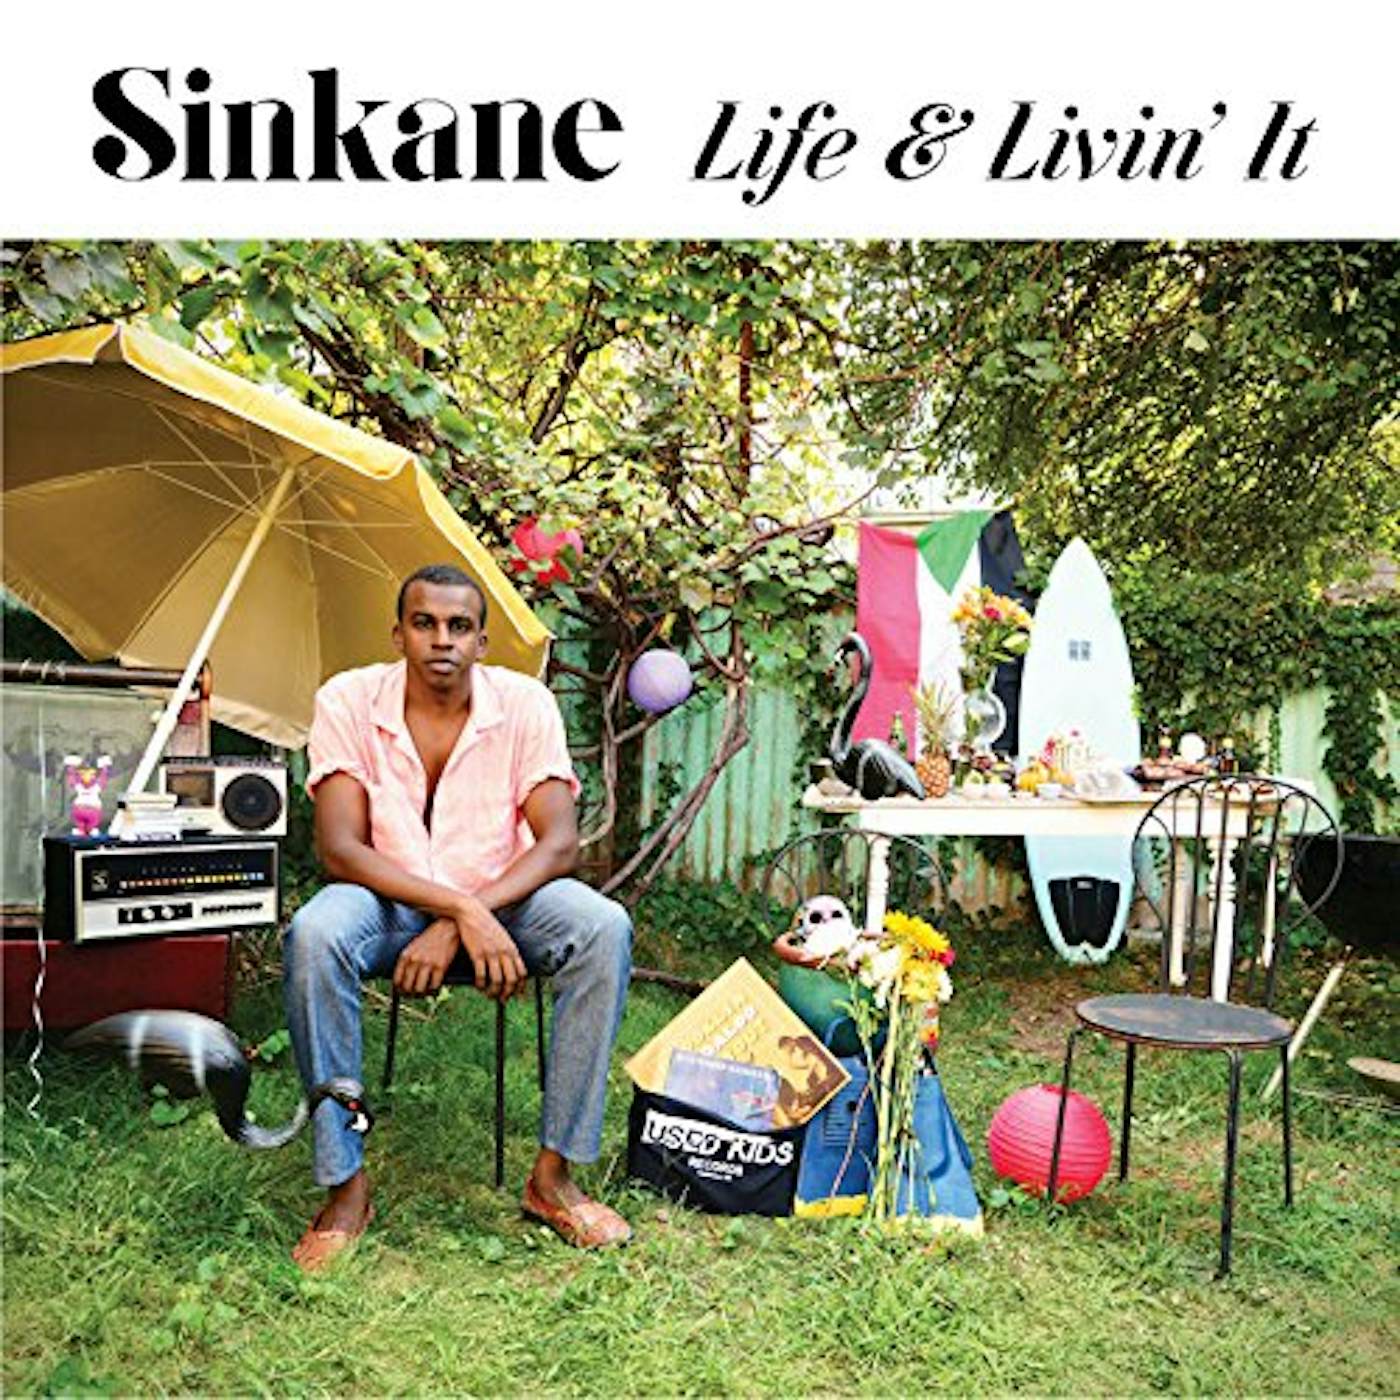 Sinkane Life & Livin' It Vinyl Record